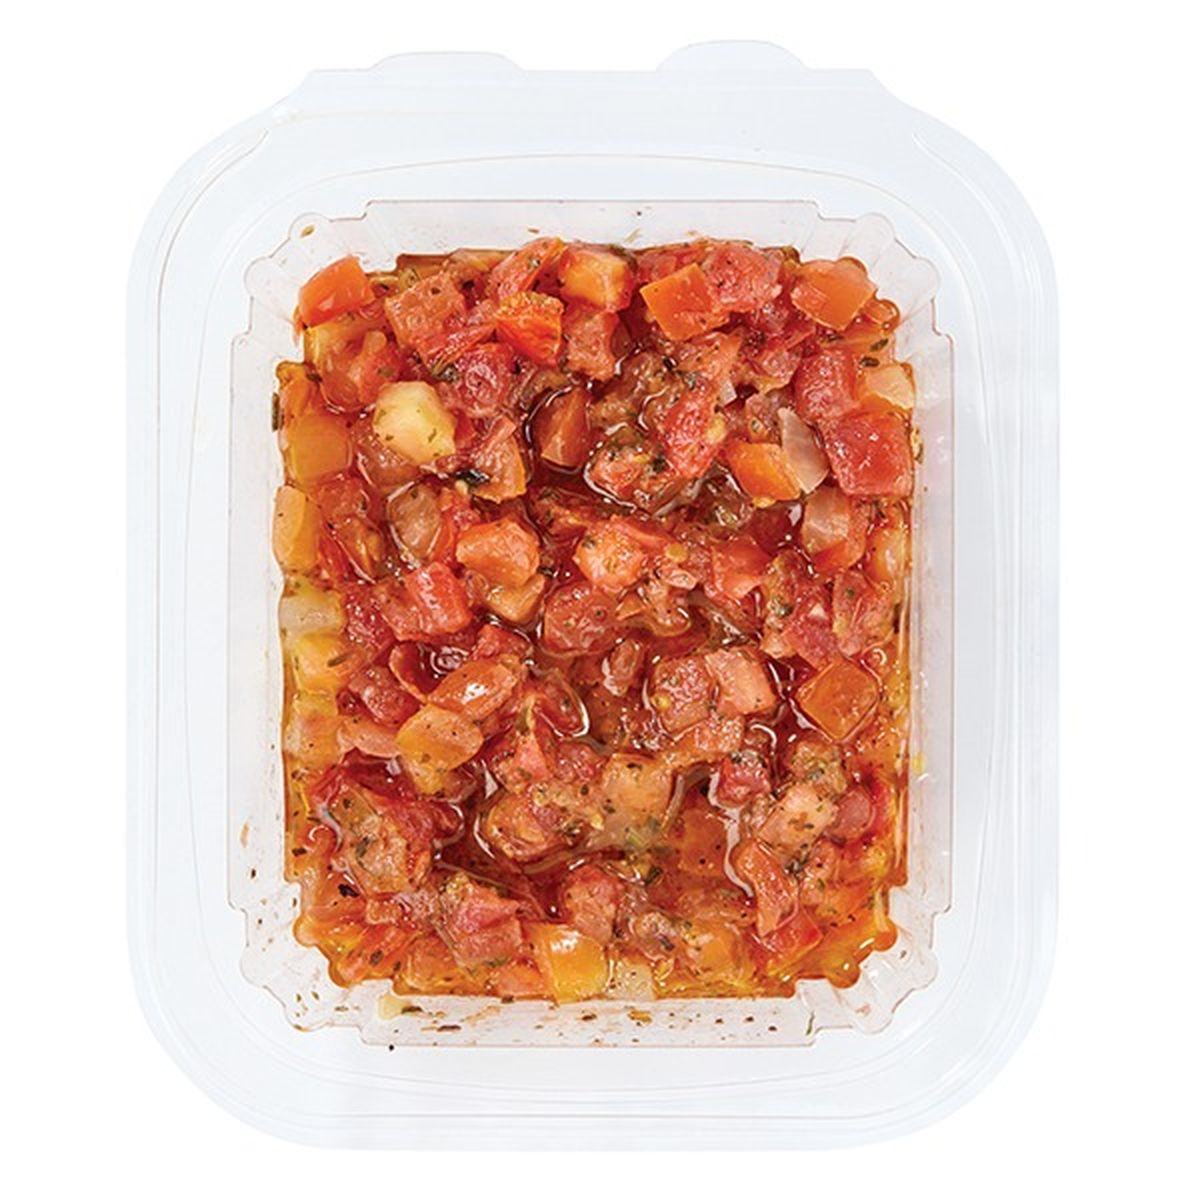 Calories in Wegmans Tomato Bruschetta